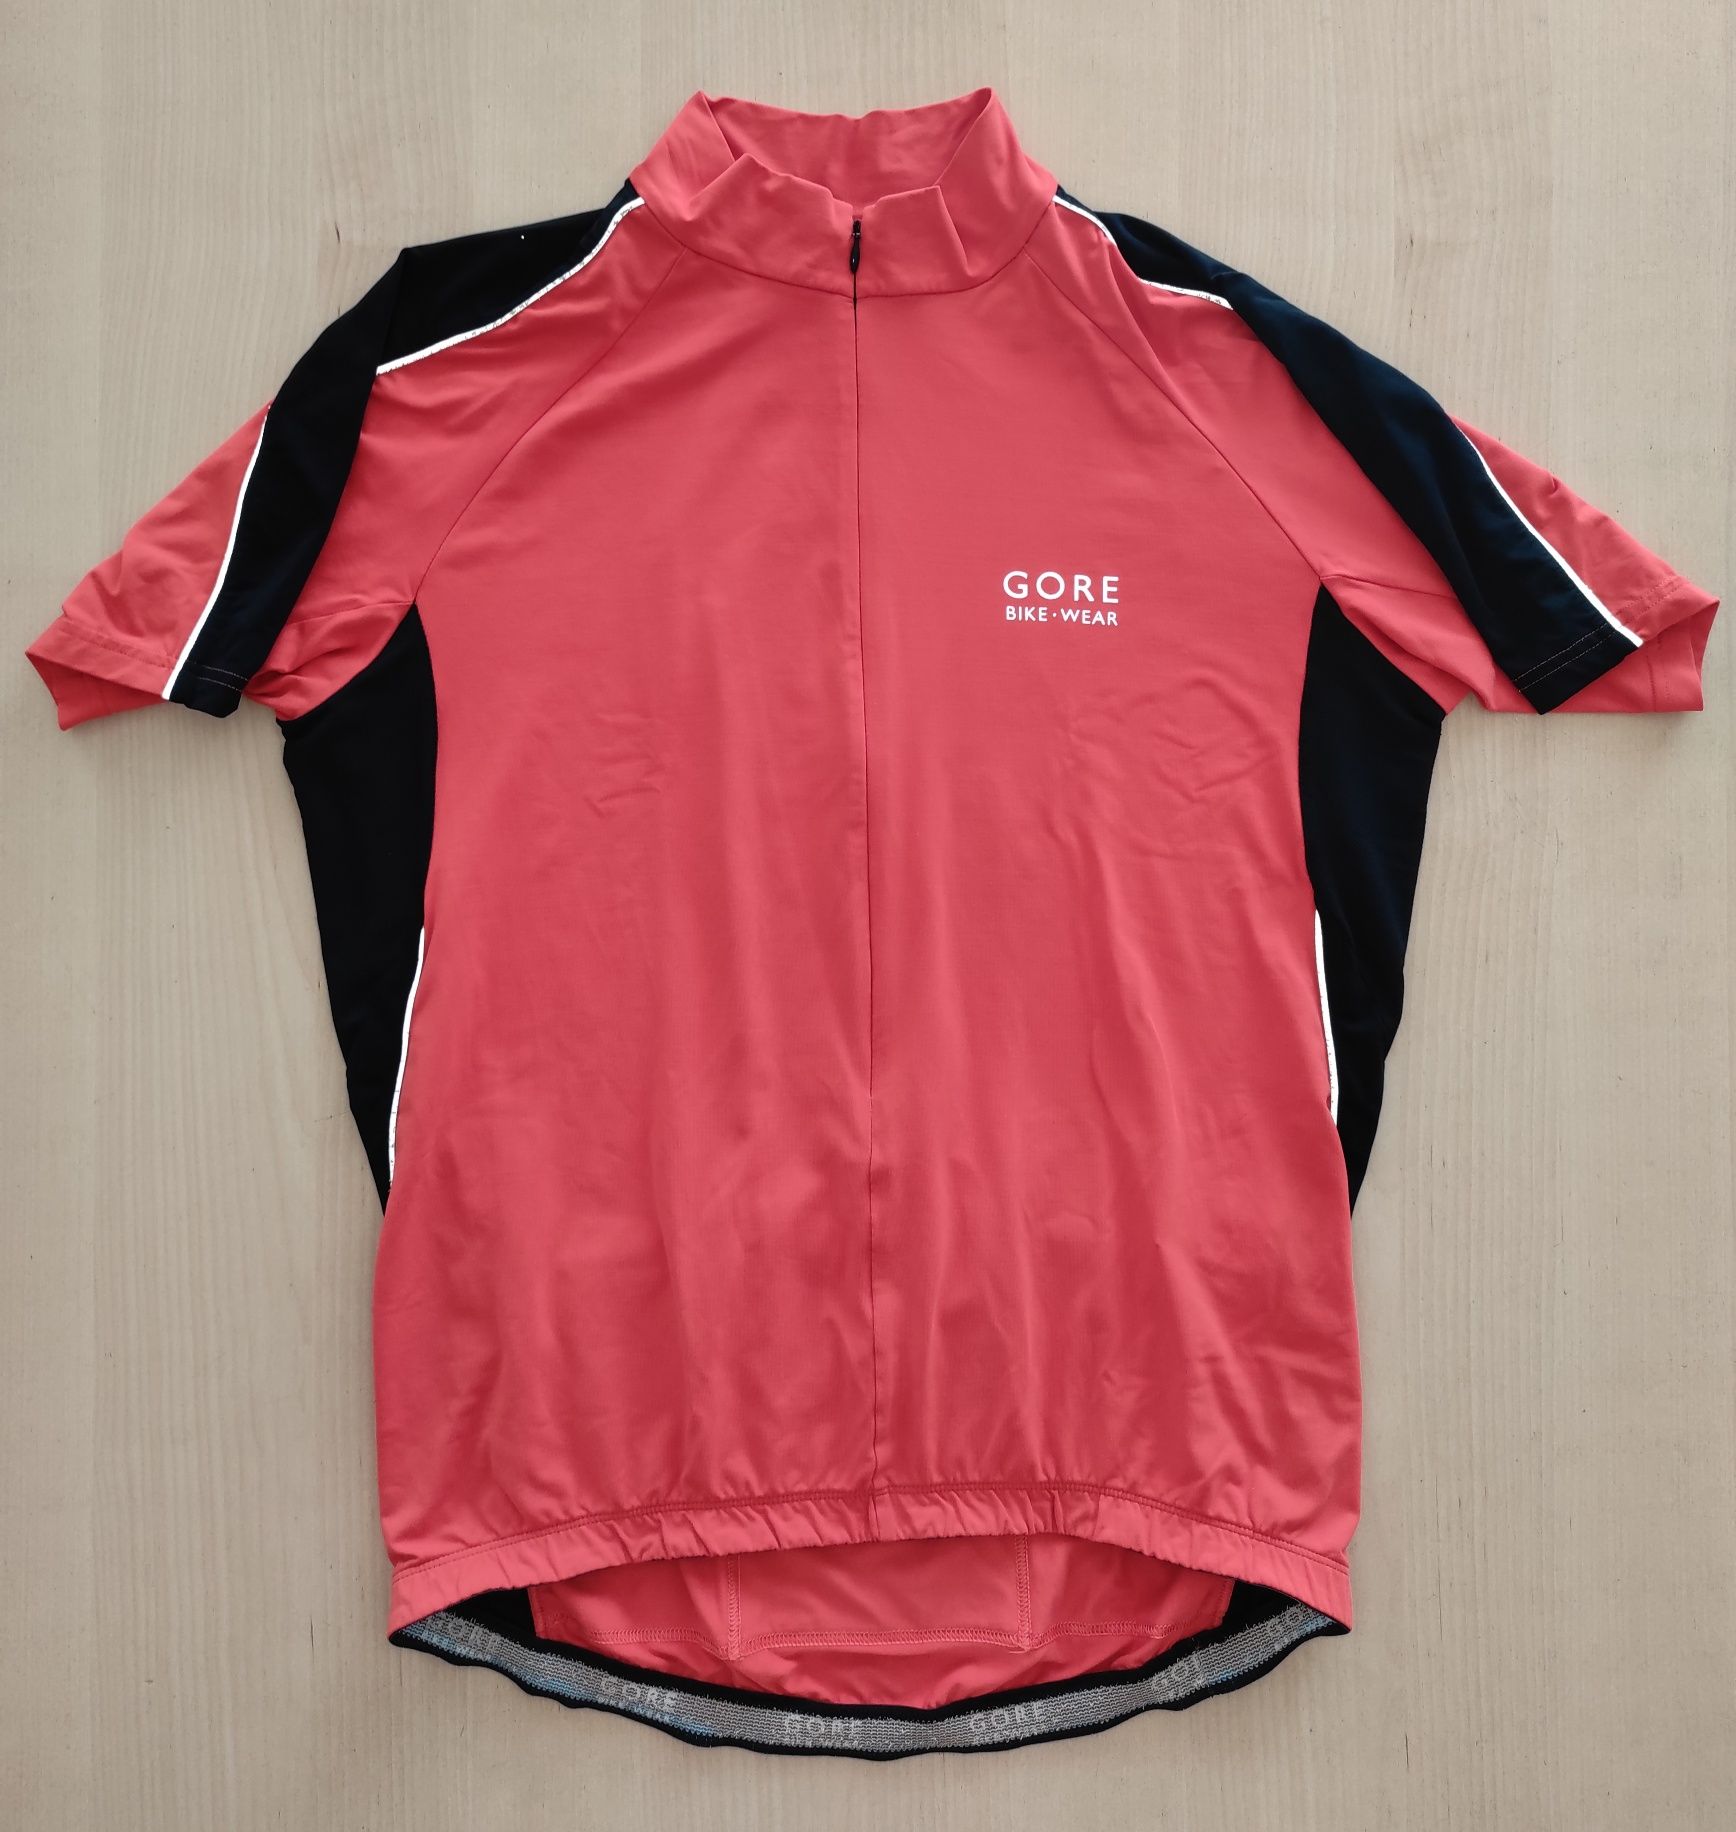 Koszulka kolarska GORE – rozmiar XL